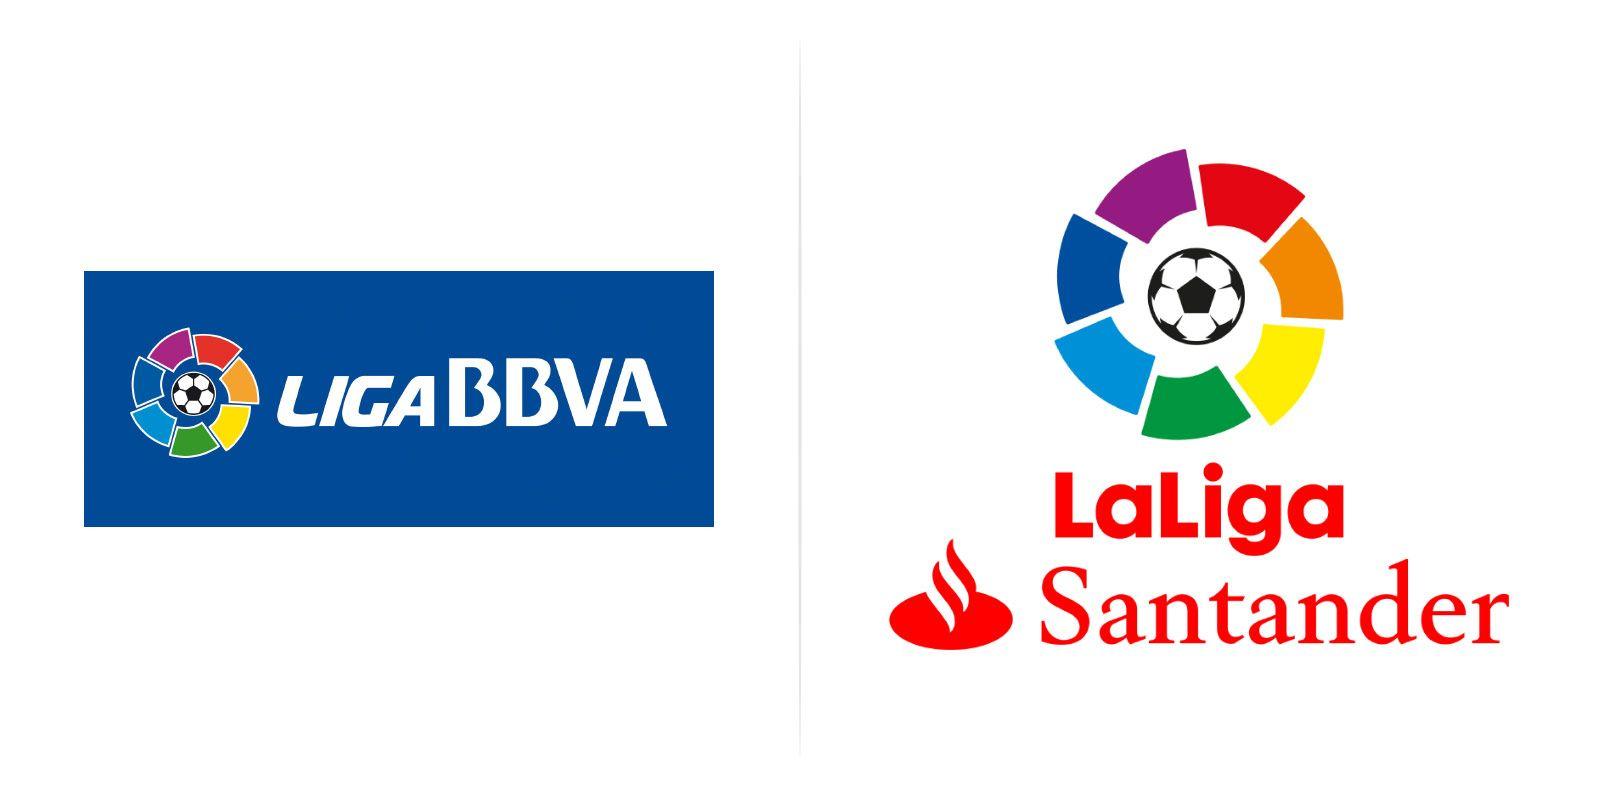 Banco Santander Becomes New La Liga Naming Sponsor